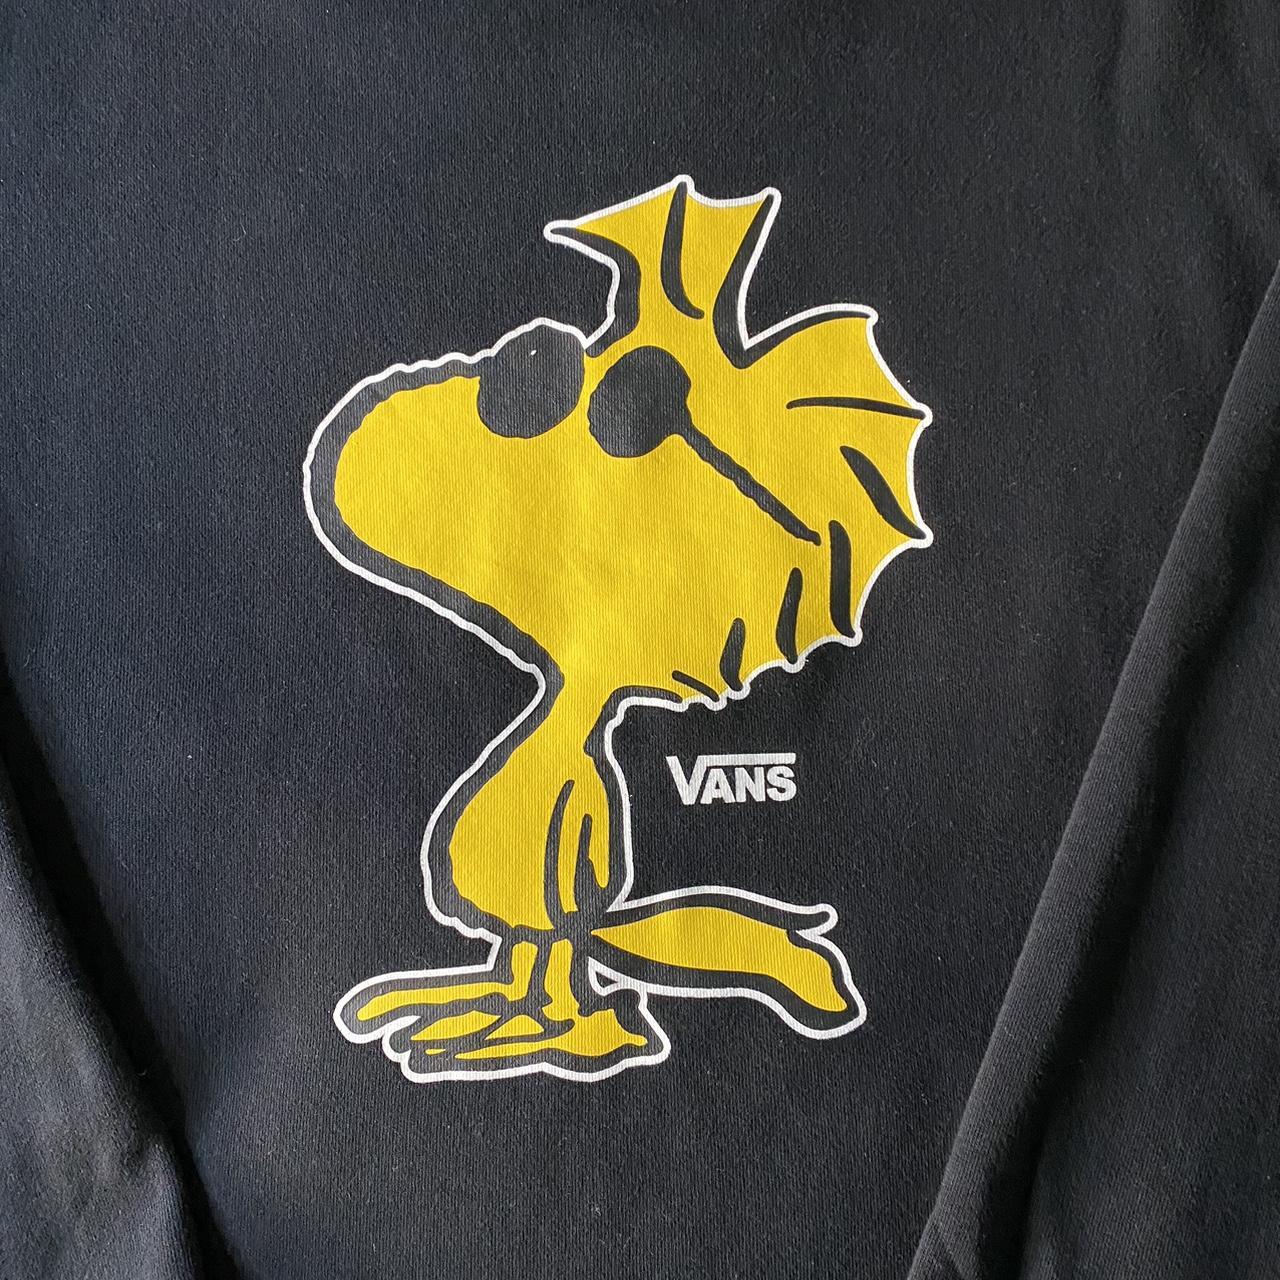 Vans x Peanuts sweater 🐥 - Depop